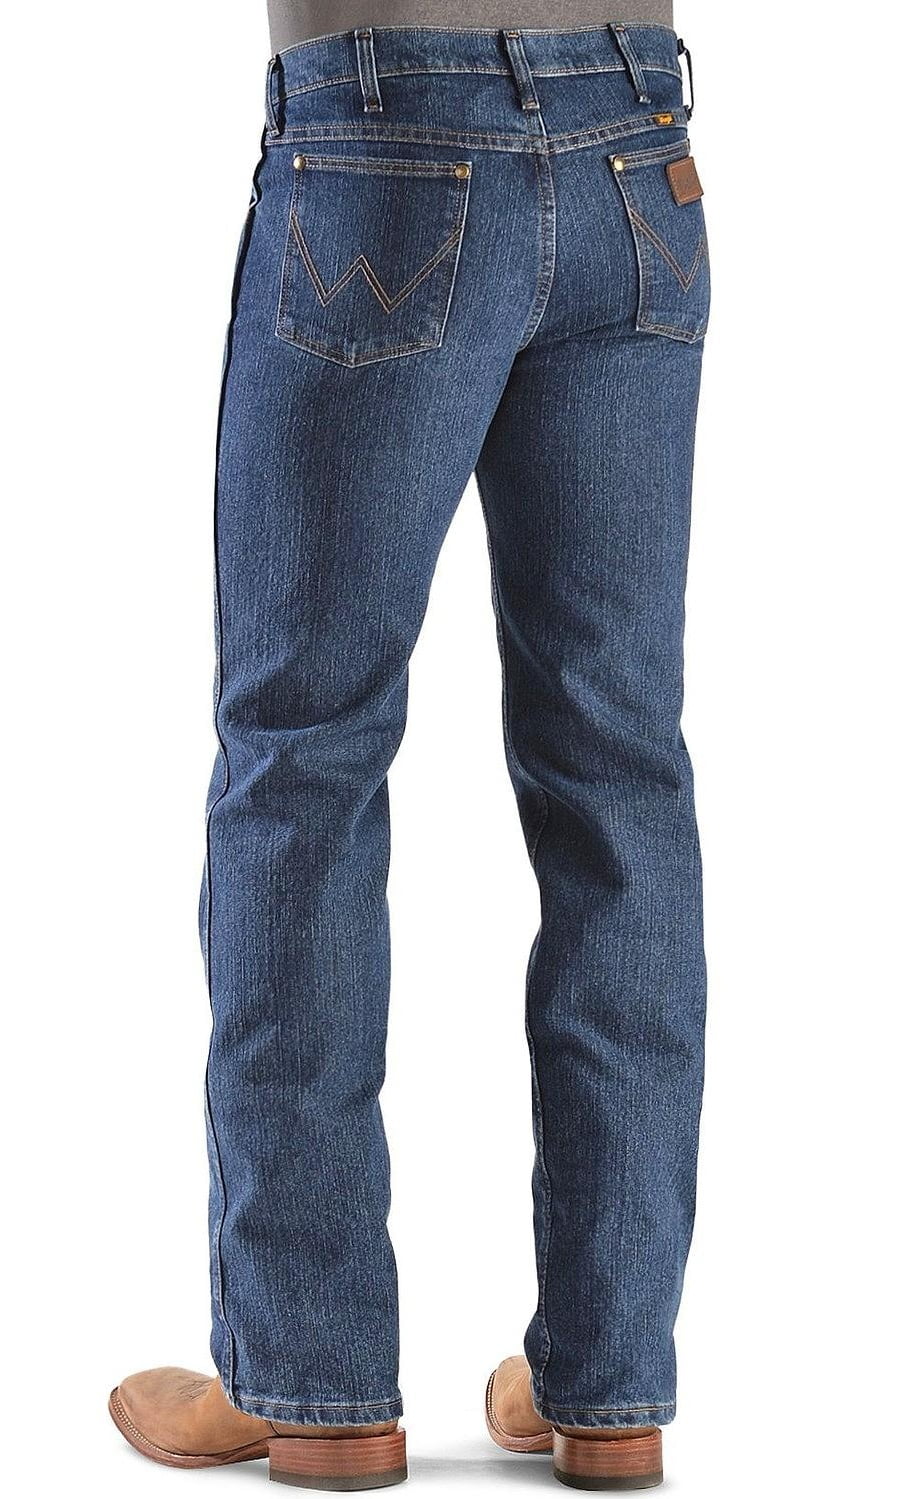 wrangler advanced comfort jeans walmart